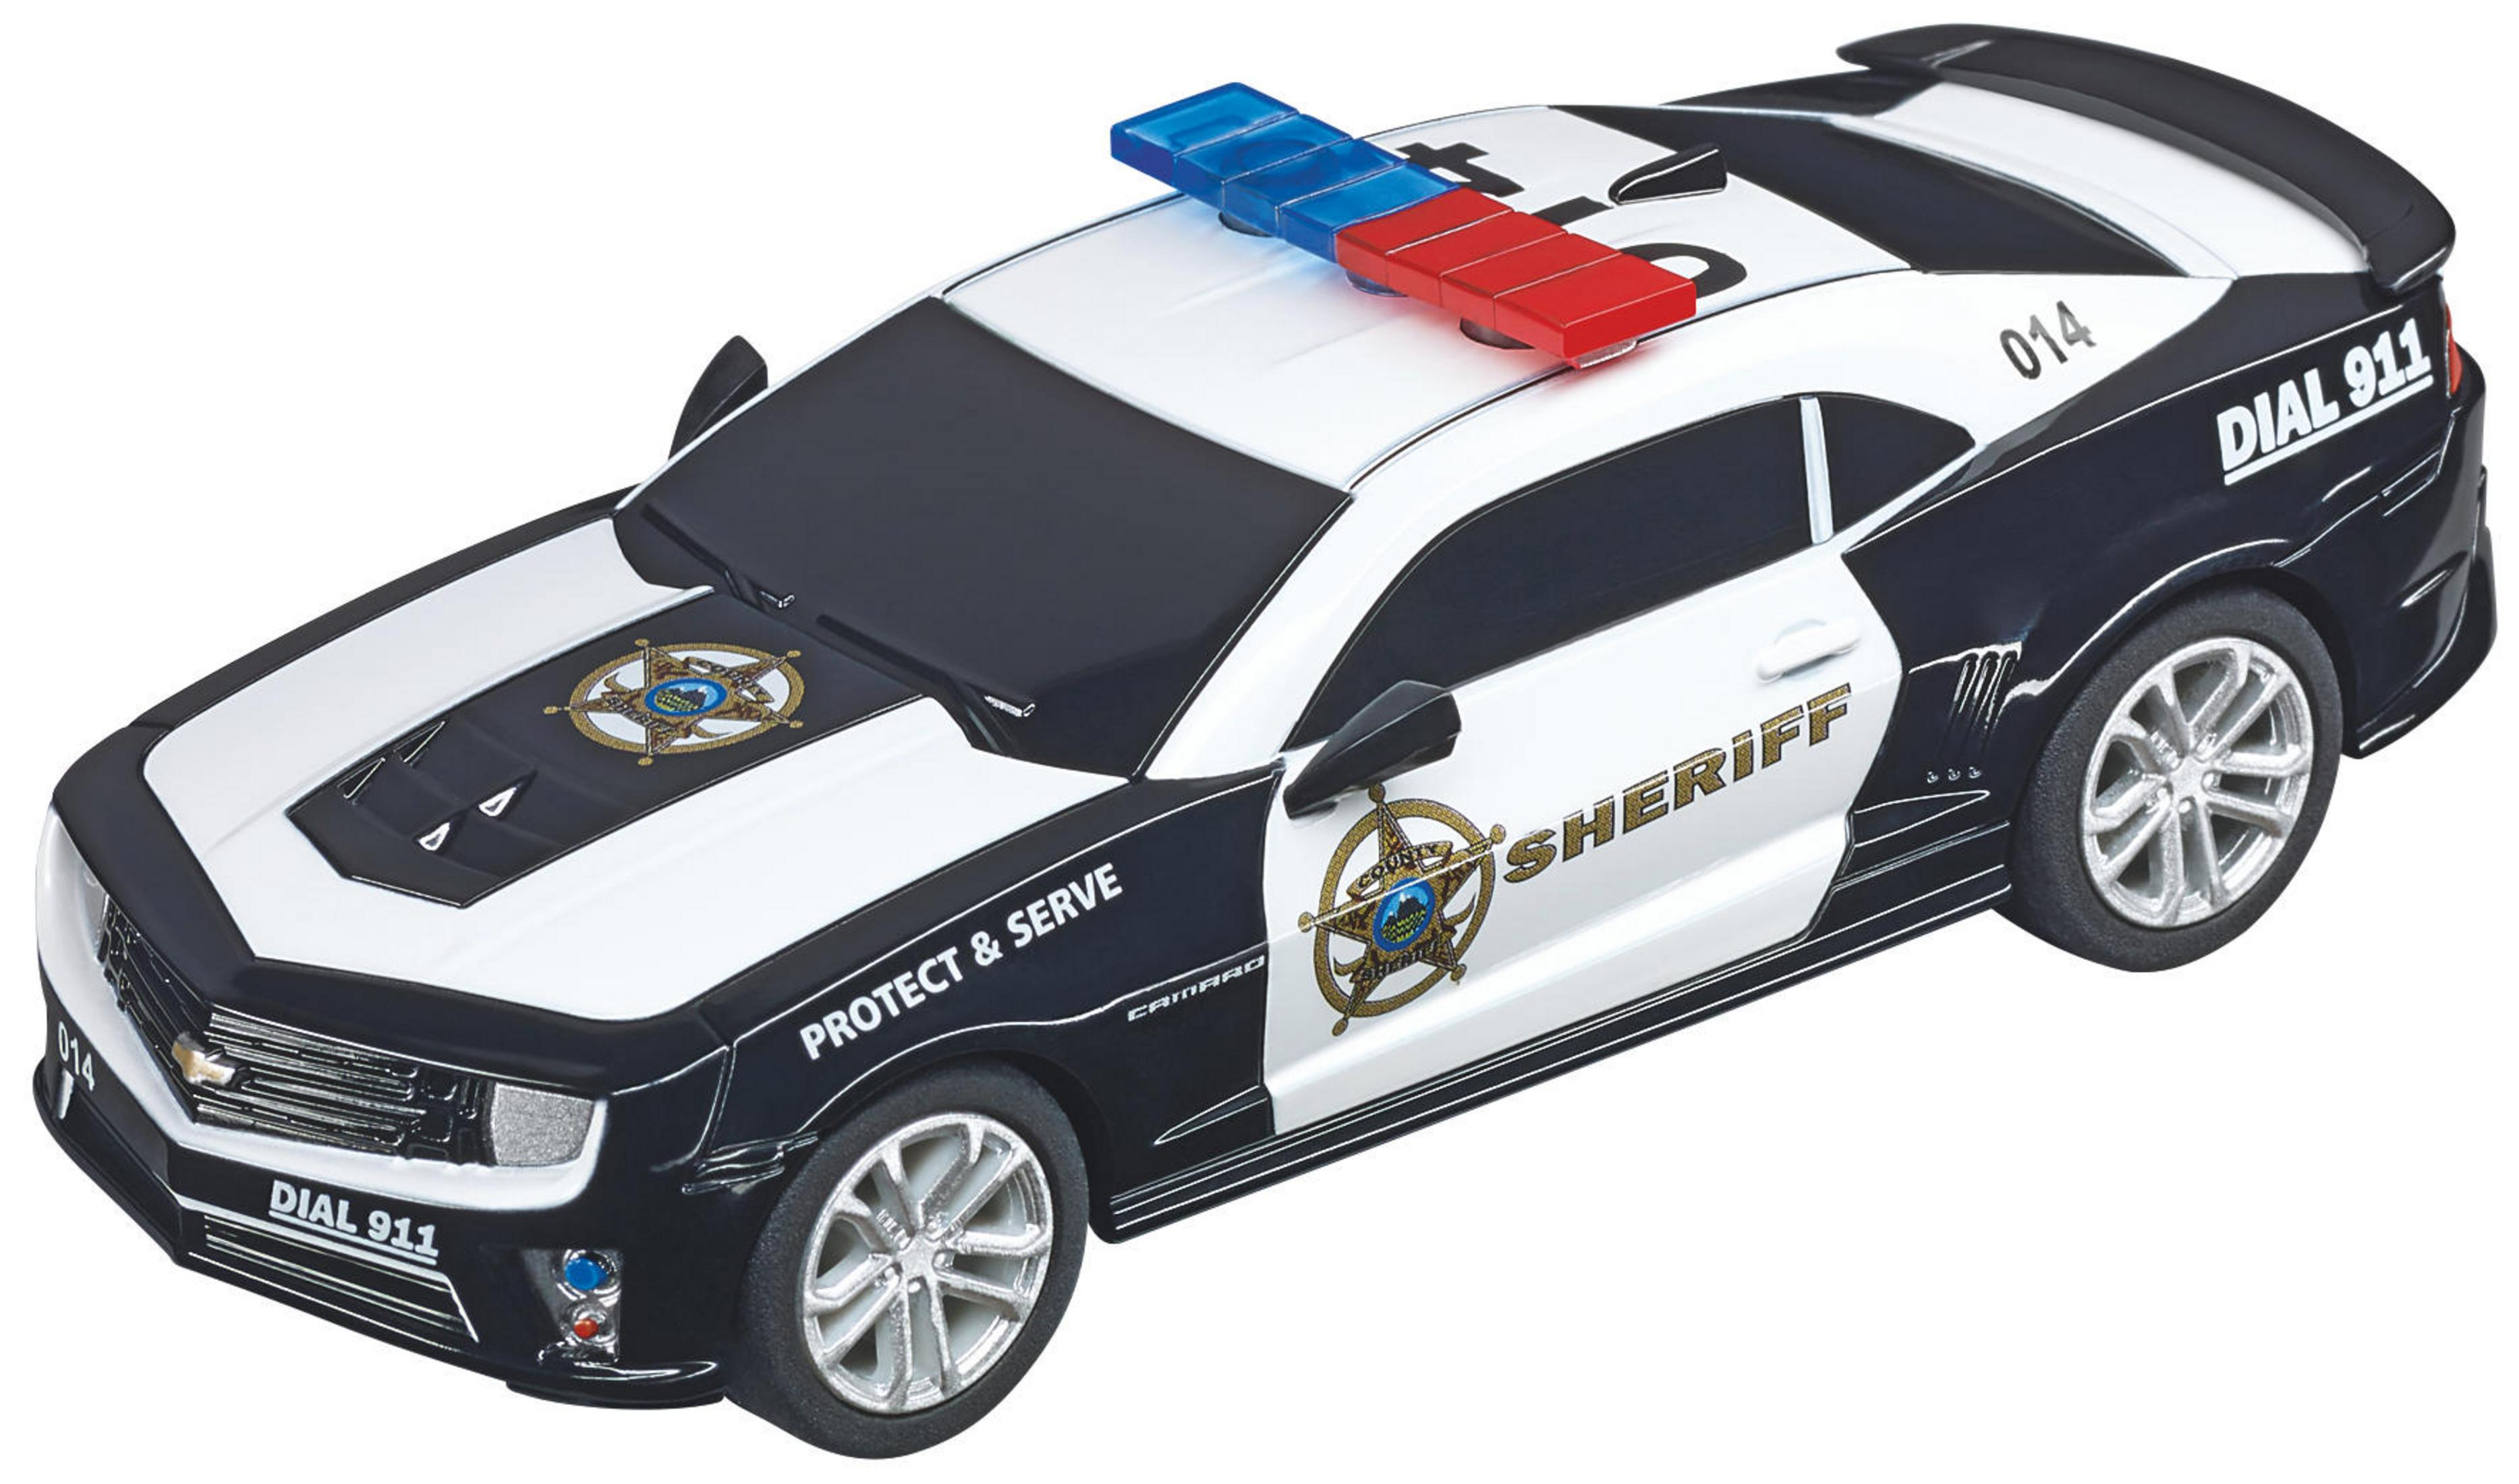 CHEVROLET CARRERA CAMARO 20064031 SHERIFF Mehrfarbig ZL1 Modellspielzeugauto, 2015